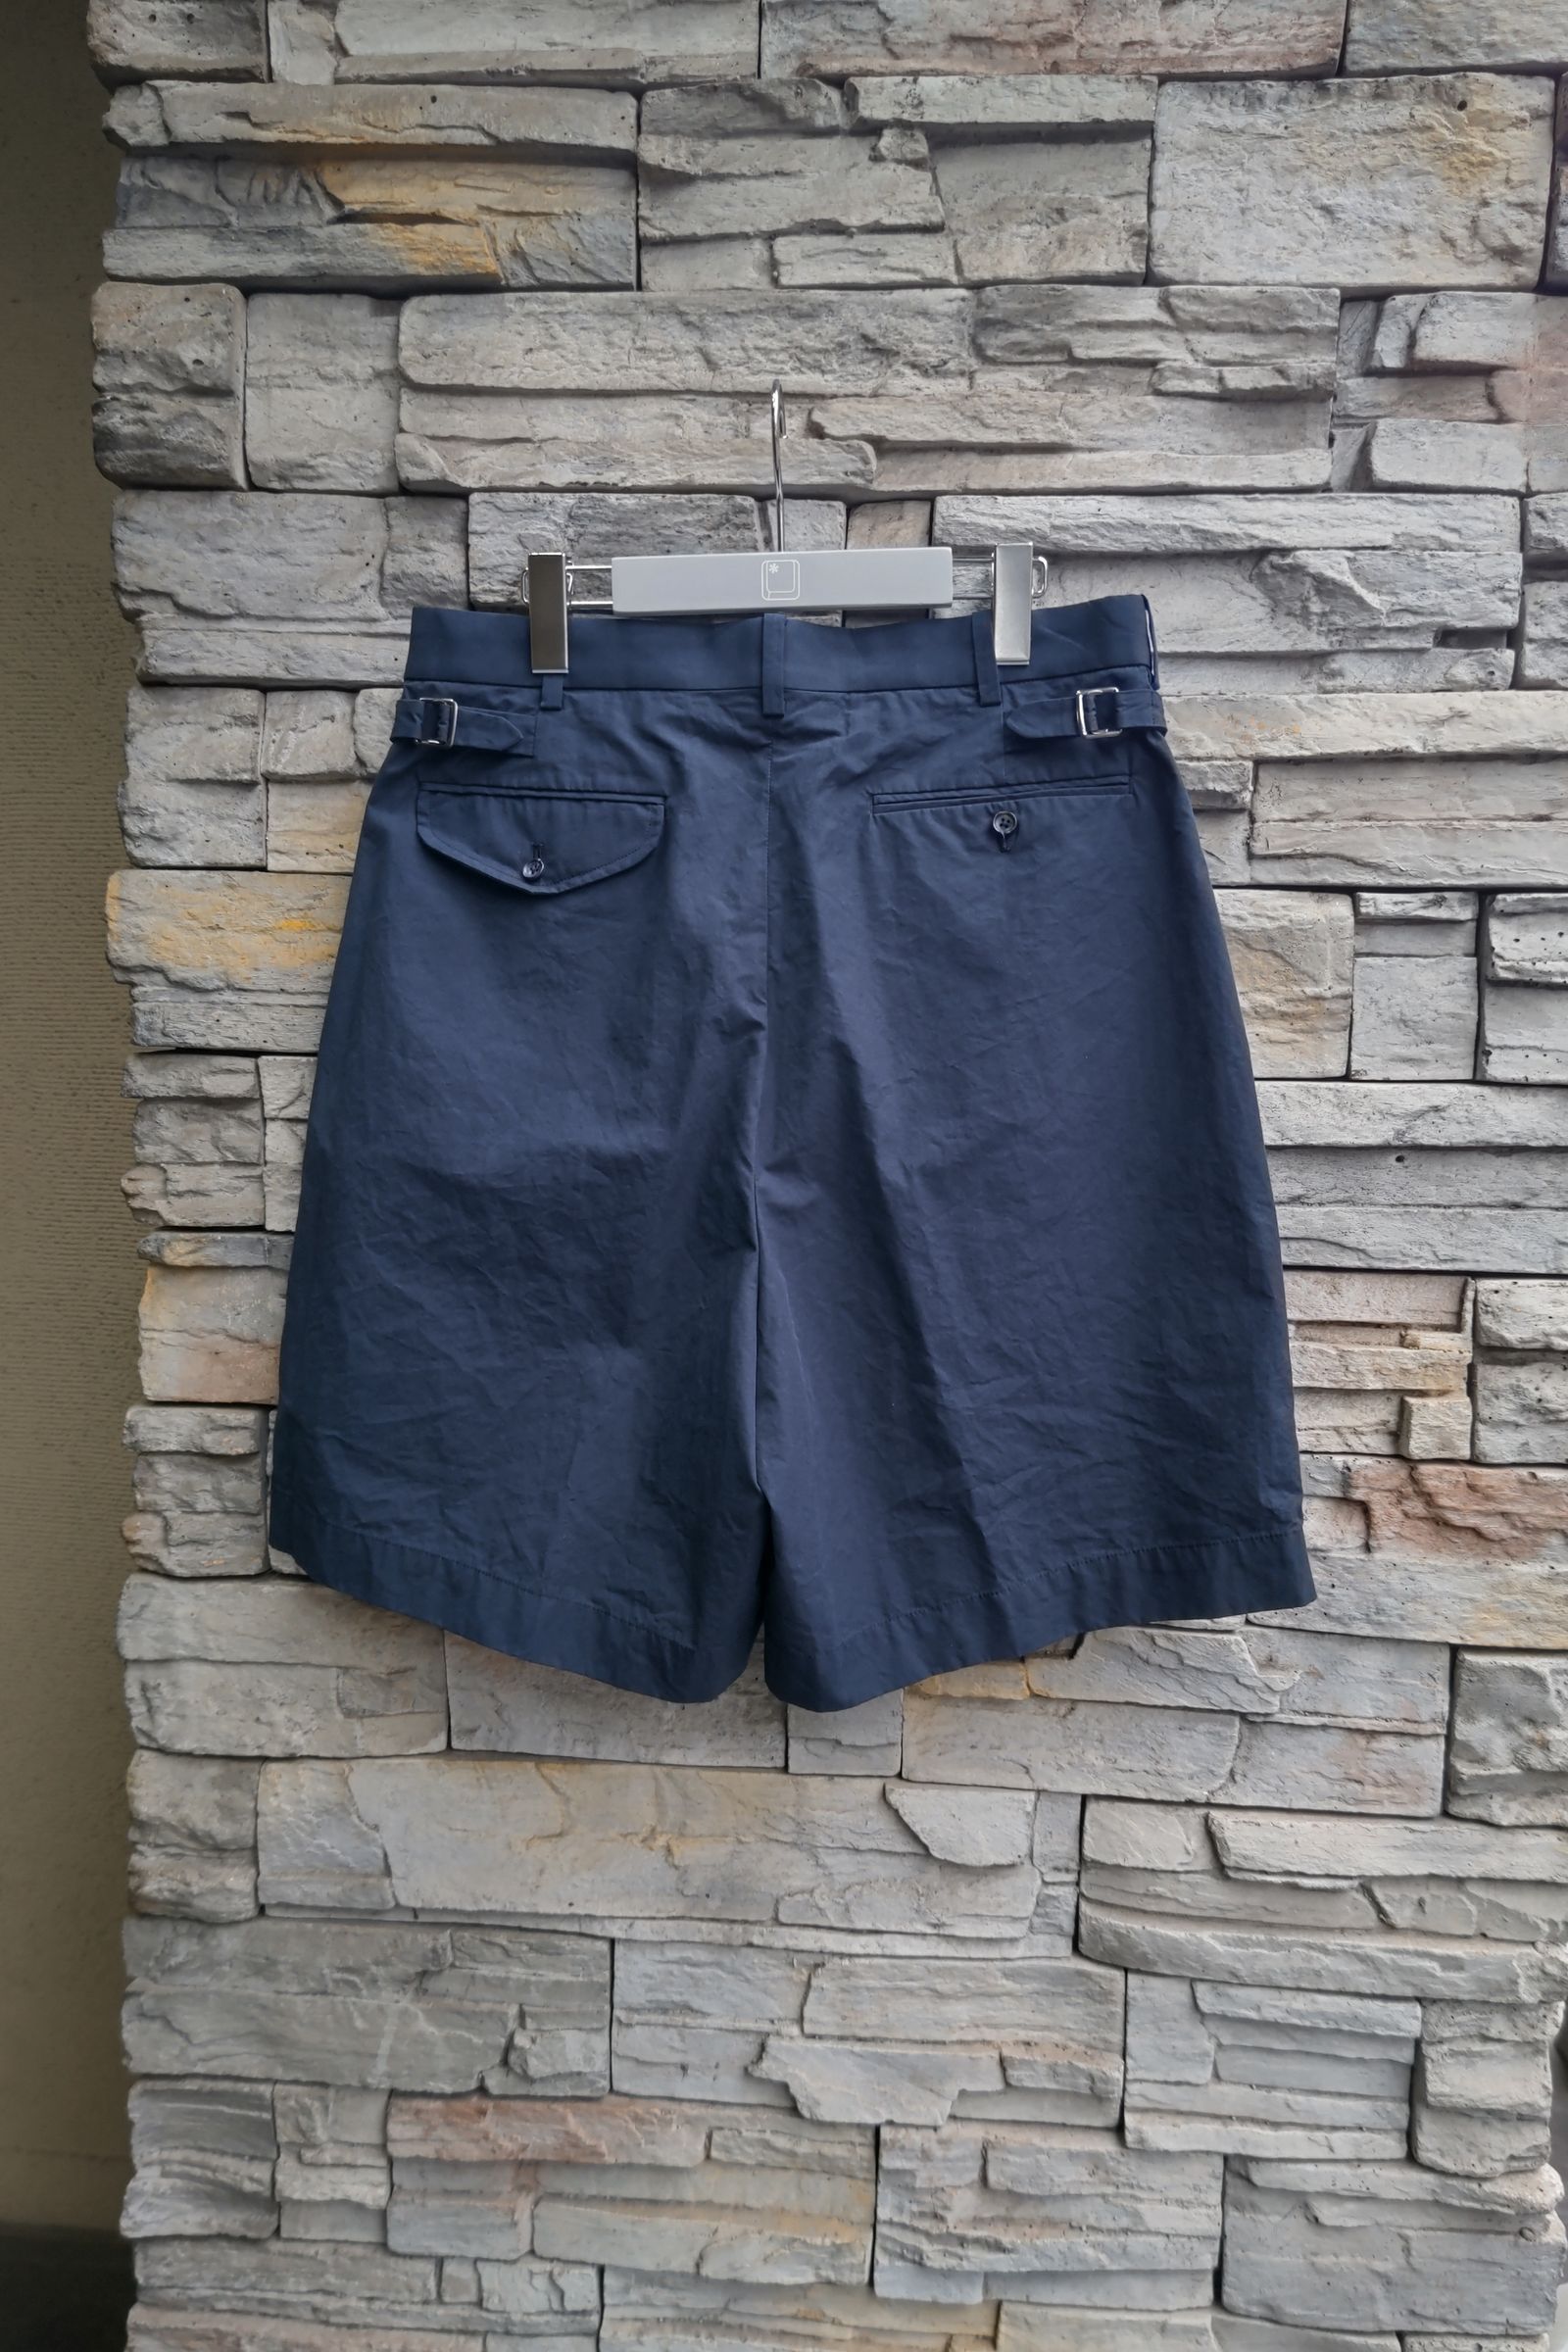 A.PRESSE - High Density Weather Cloth Shorts -navy- 23ss | asterisk